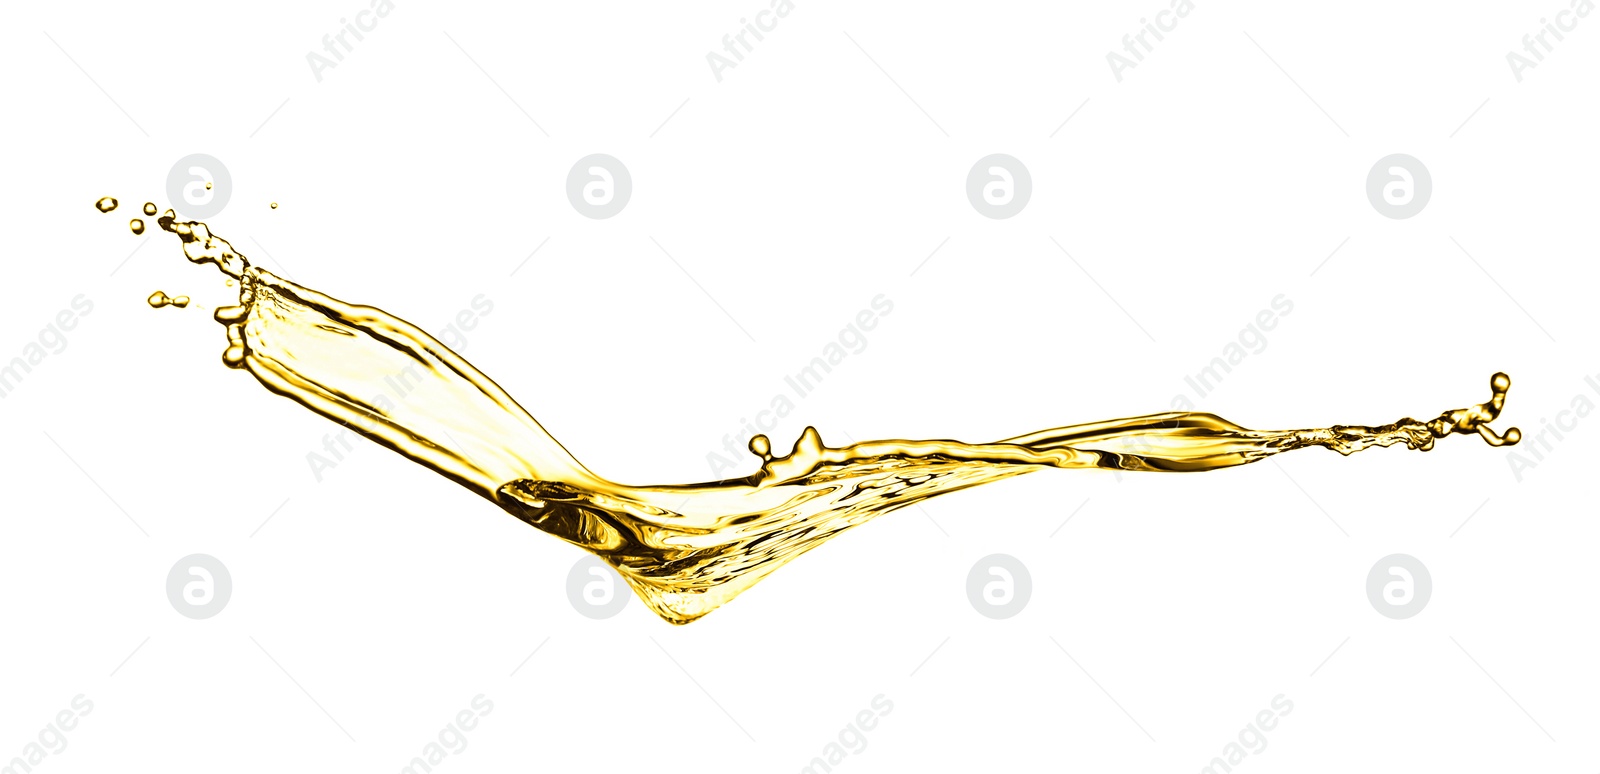 Image of Splash of golden oily liquid on white background